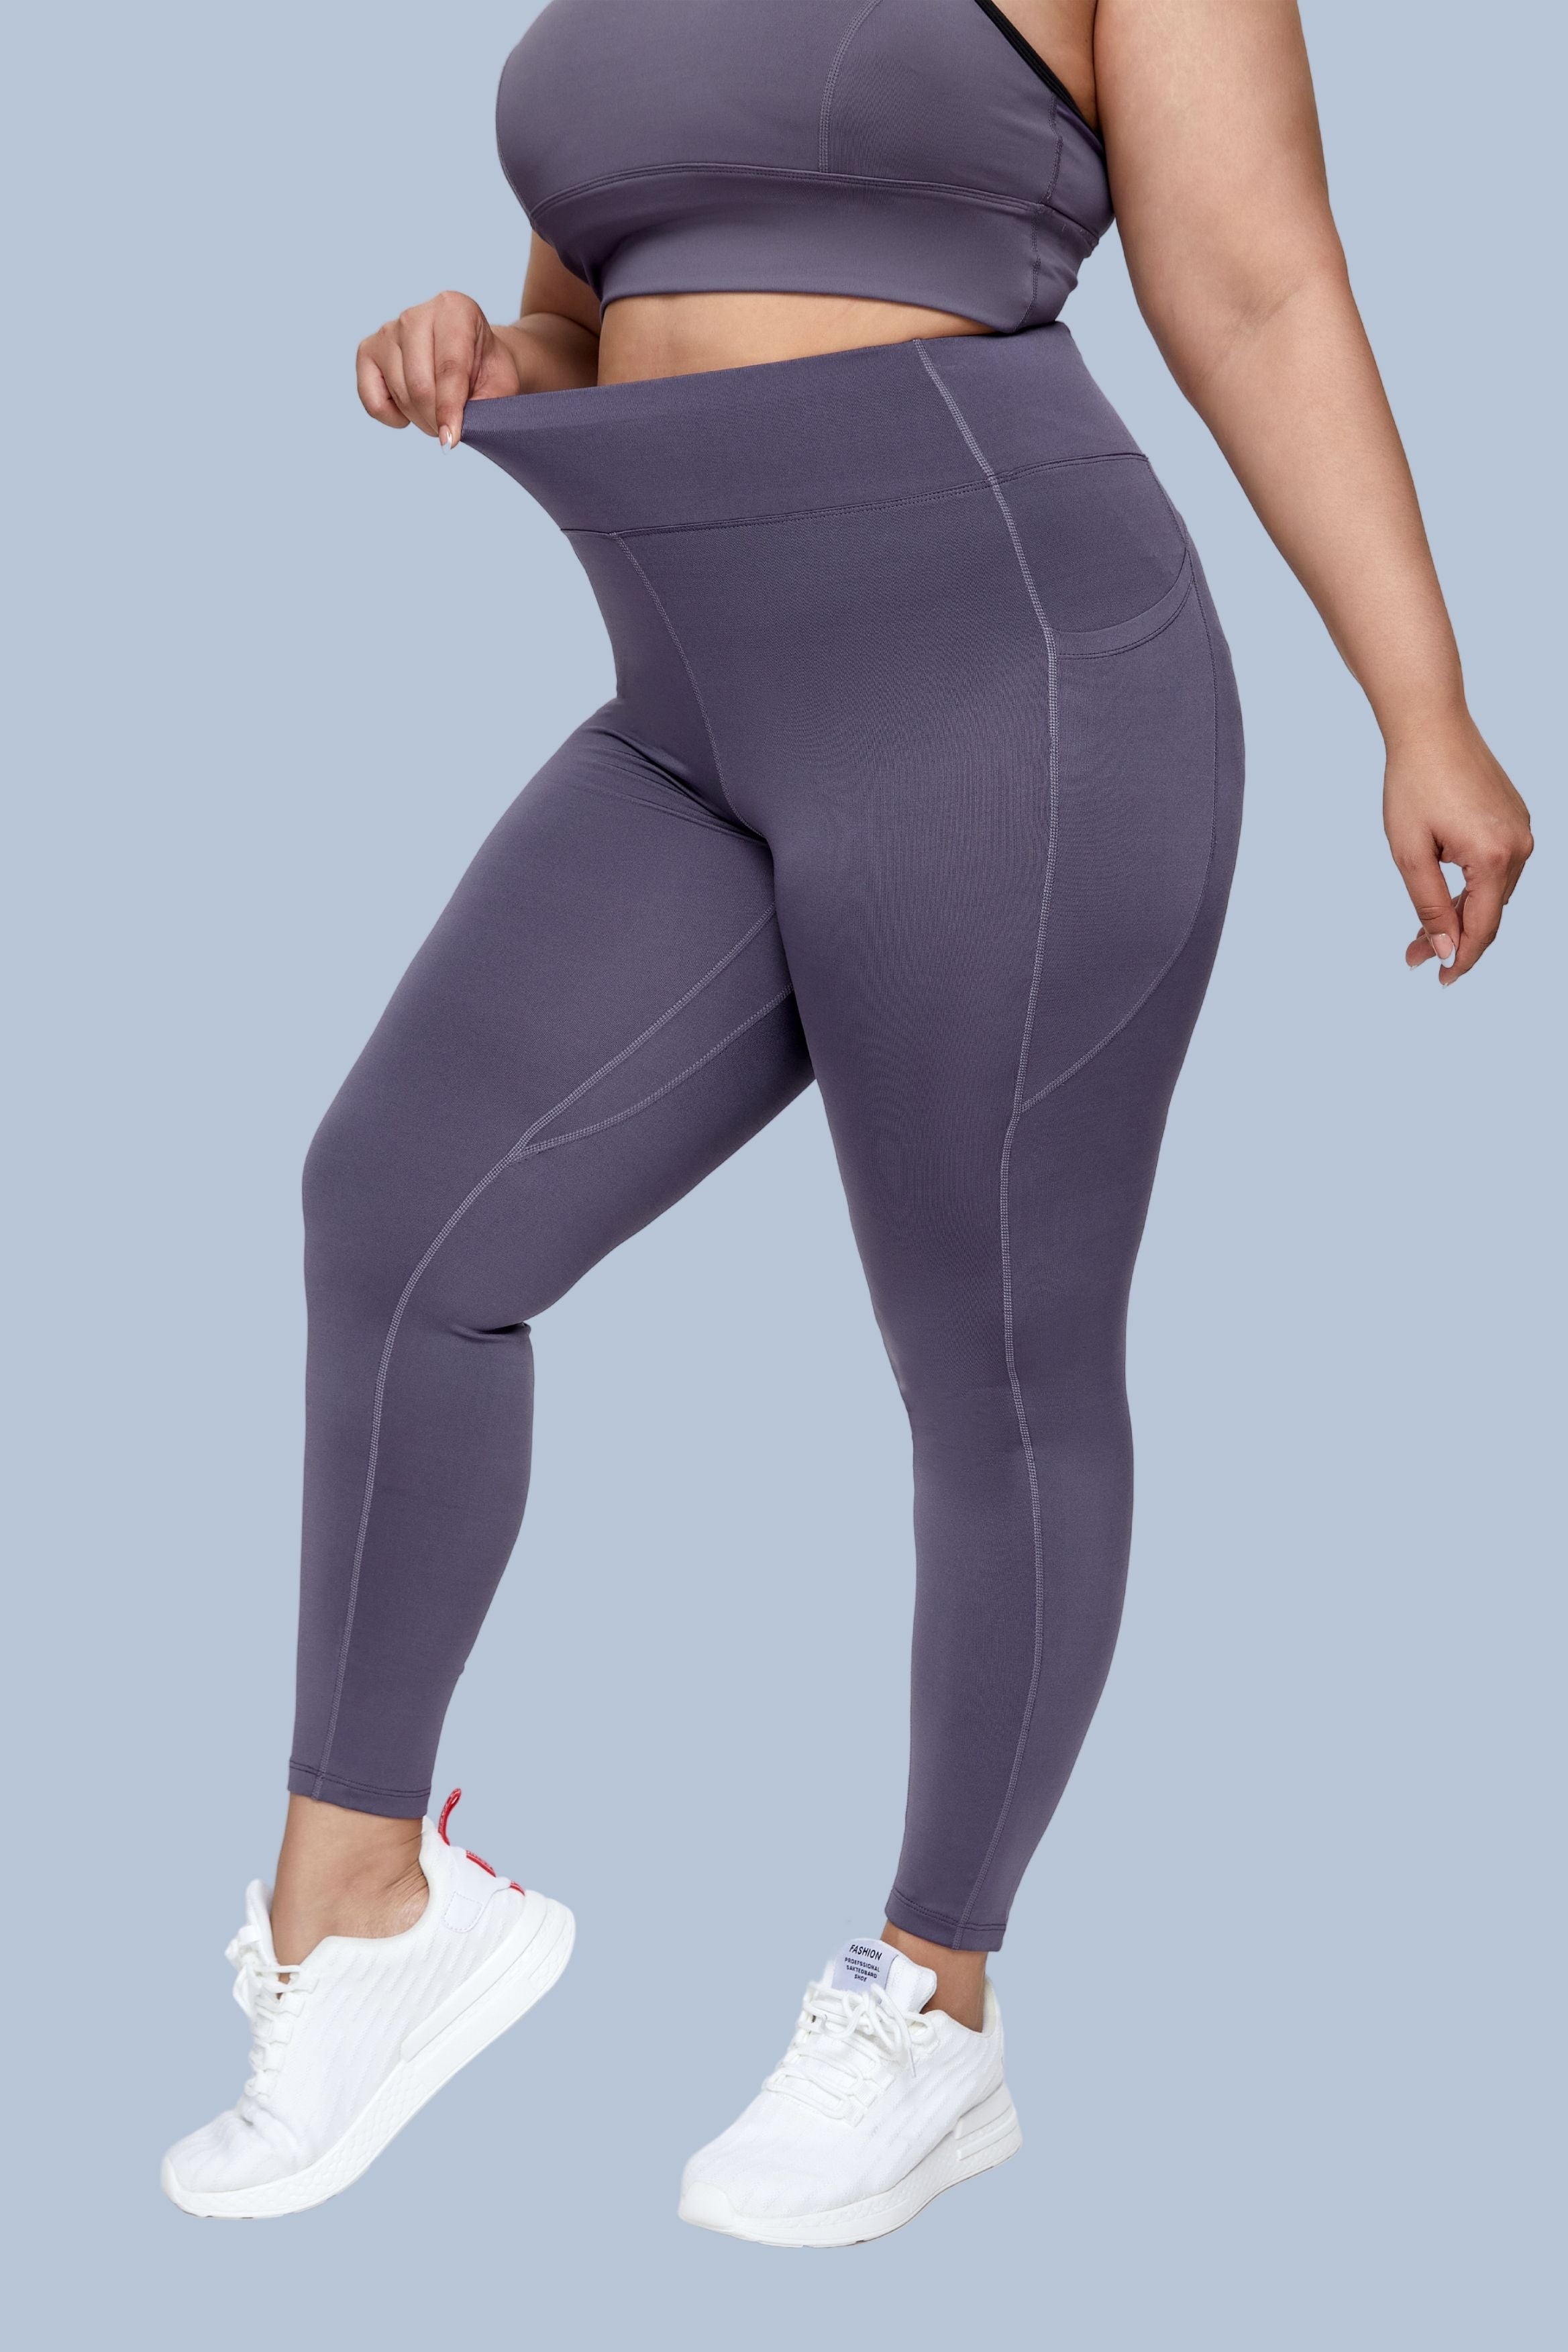 Women's Plus Size Pockets High Waisted Leggings - 0 XL / Purple